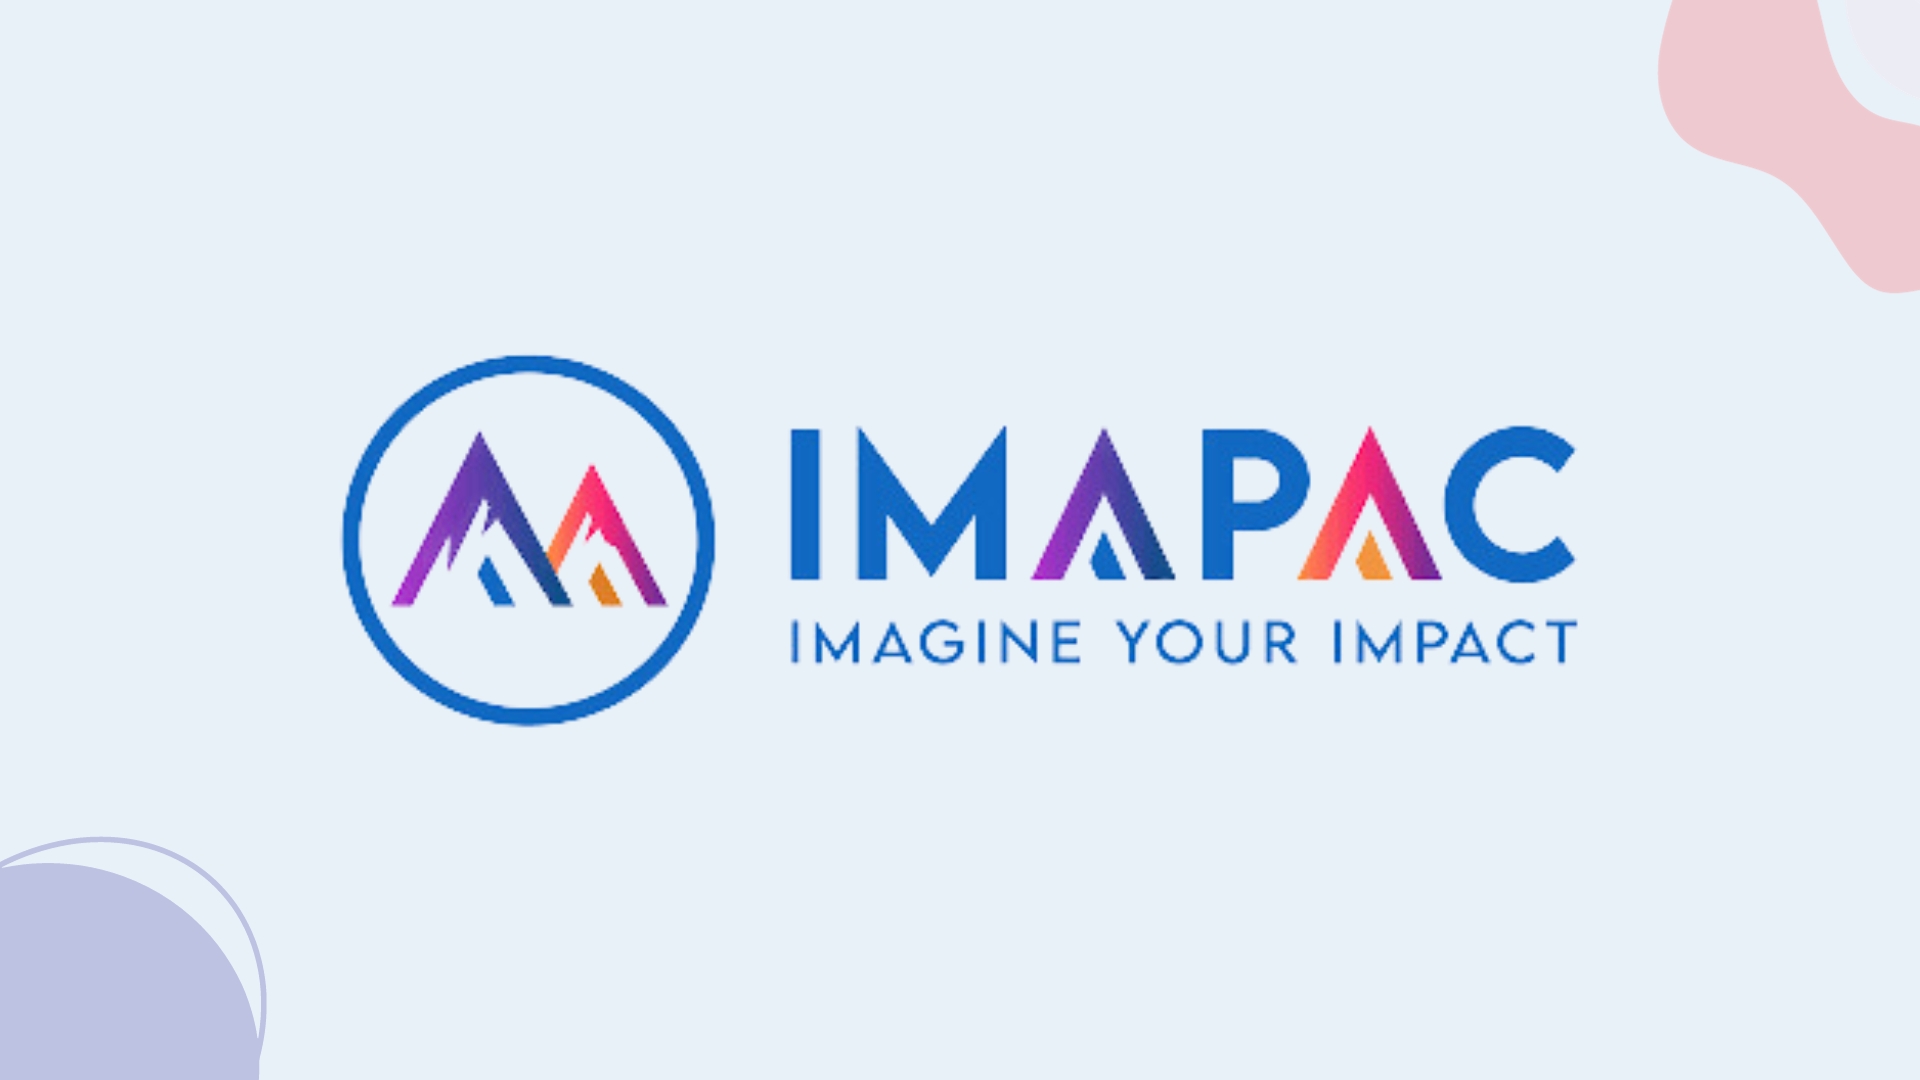 IMAPAC’s 79% Leap in Employee Data Management